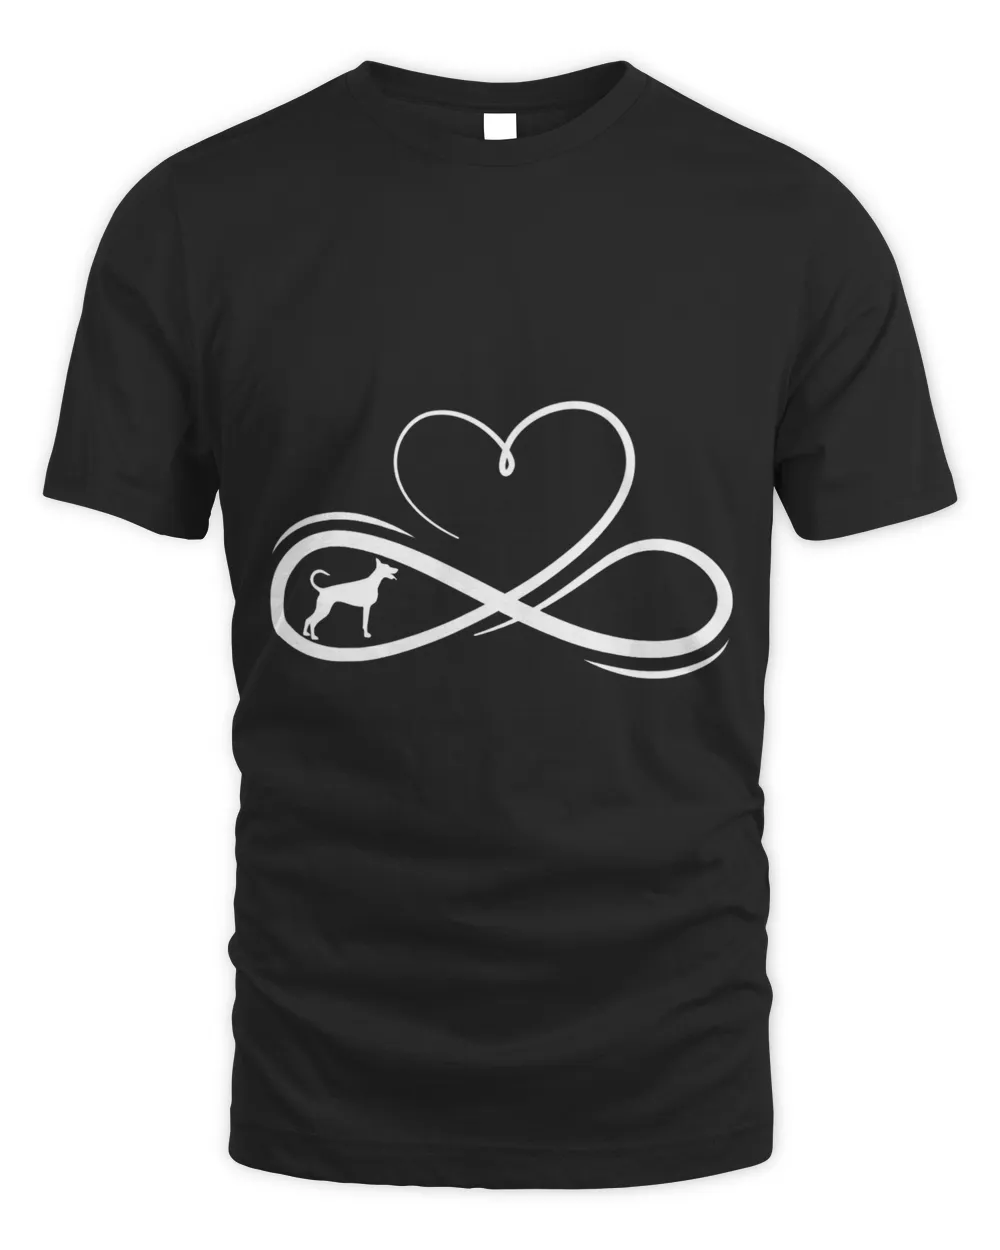 Doberman Pinscher Infinite Love Heart Infinity Symbol Design